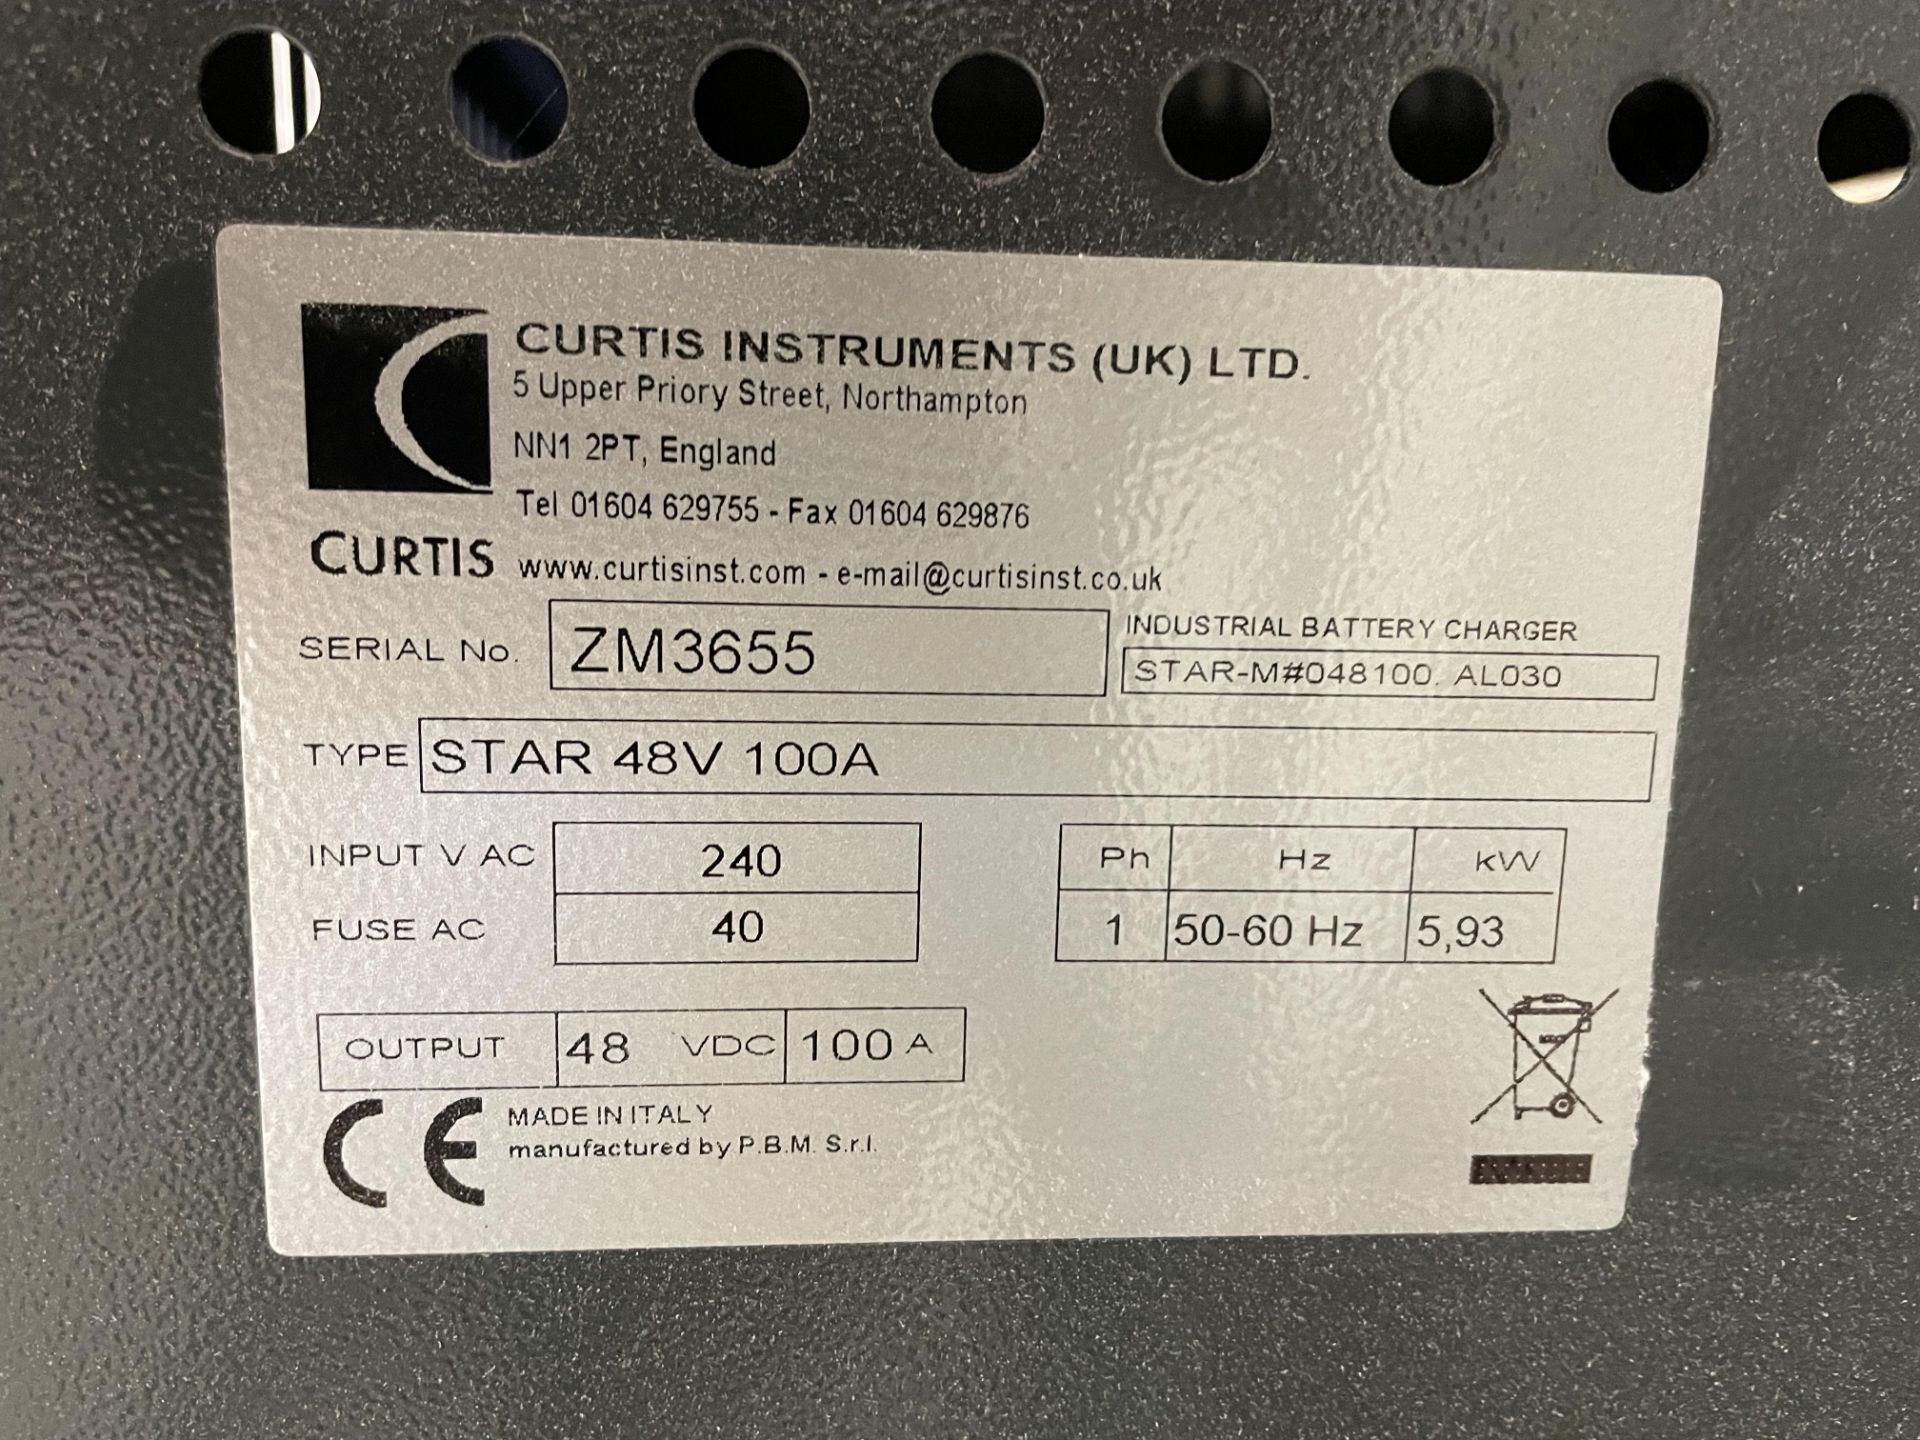 Curtis Concerto Model STAR 48V 100A Industrial Battery Charger S/No. ZM3655, 240V - Image 2 of 2